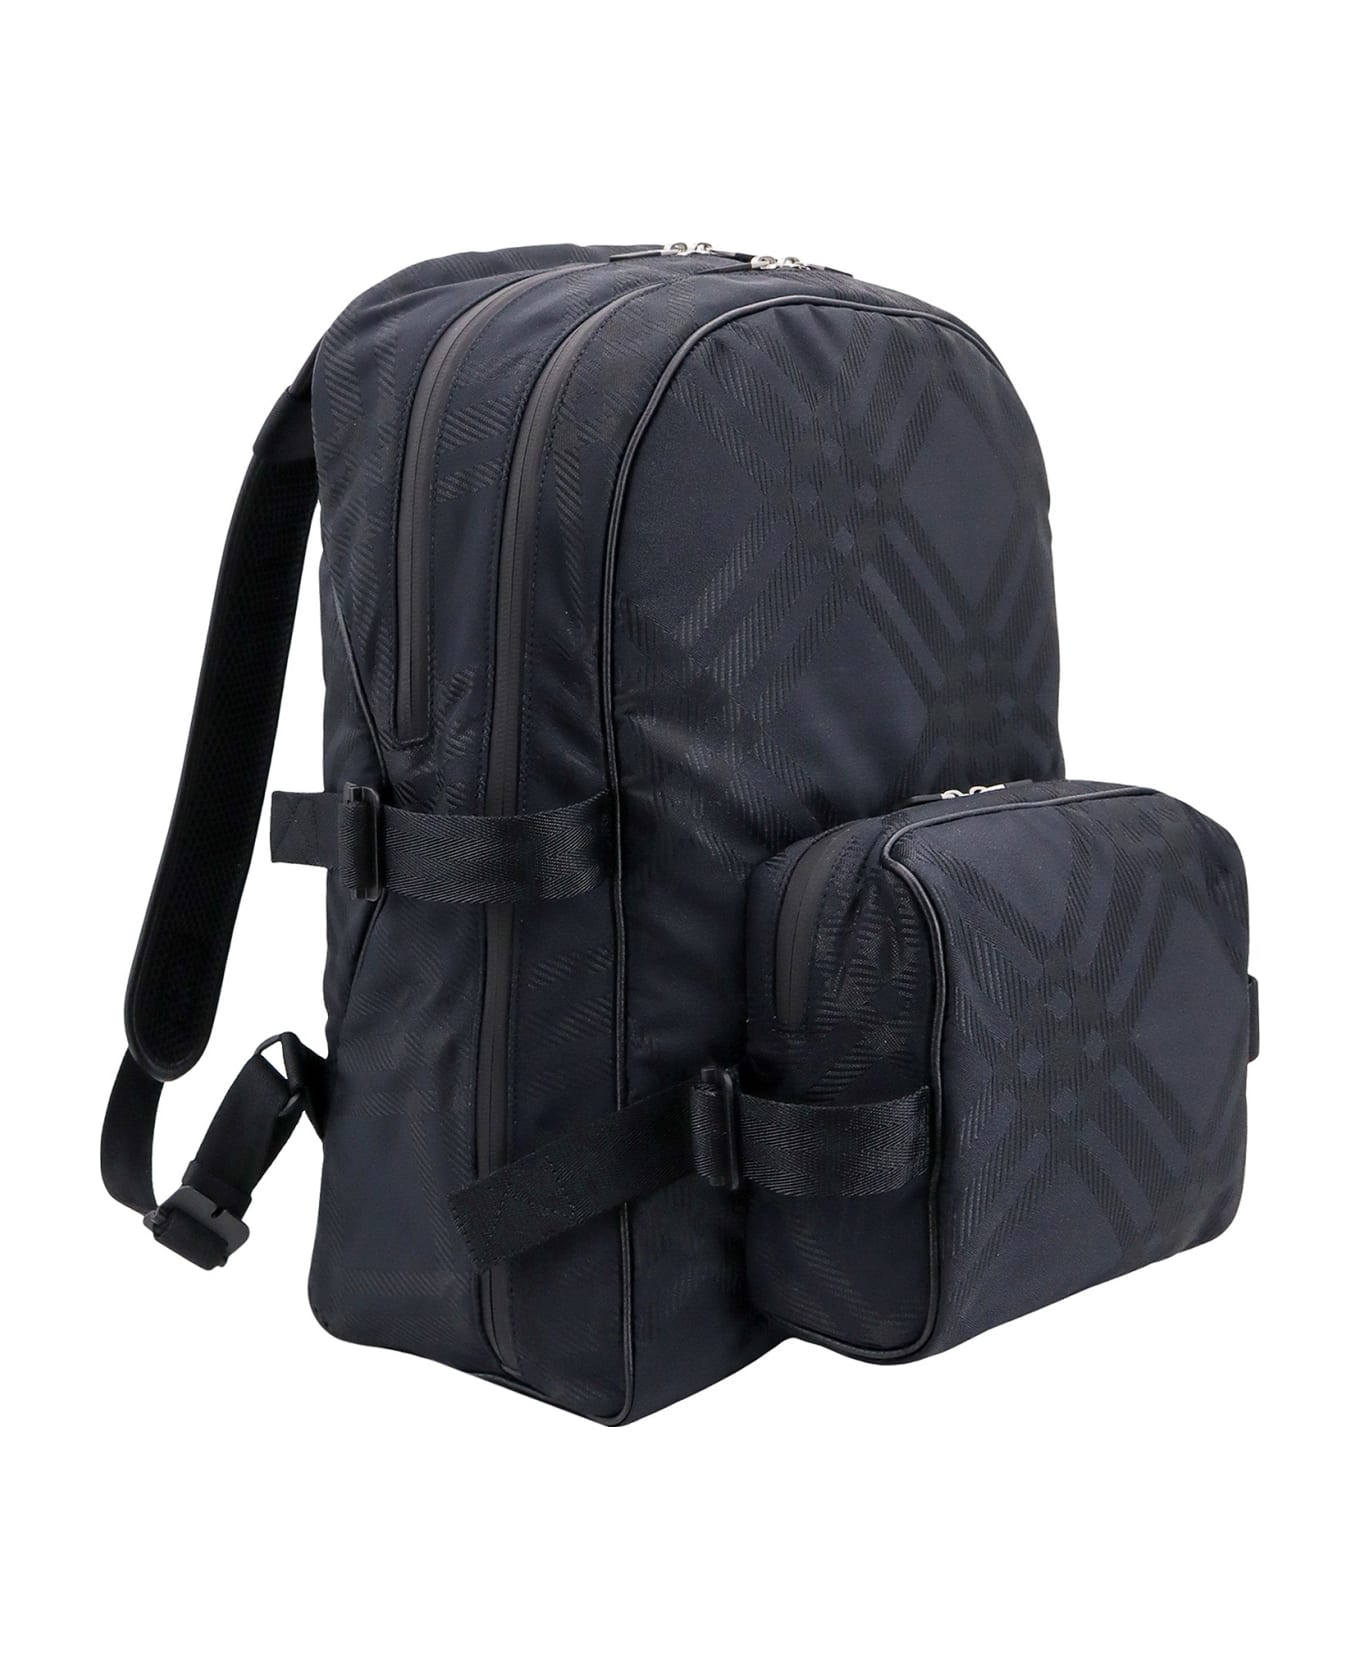 Burberry Backpack - Black バックパック